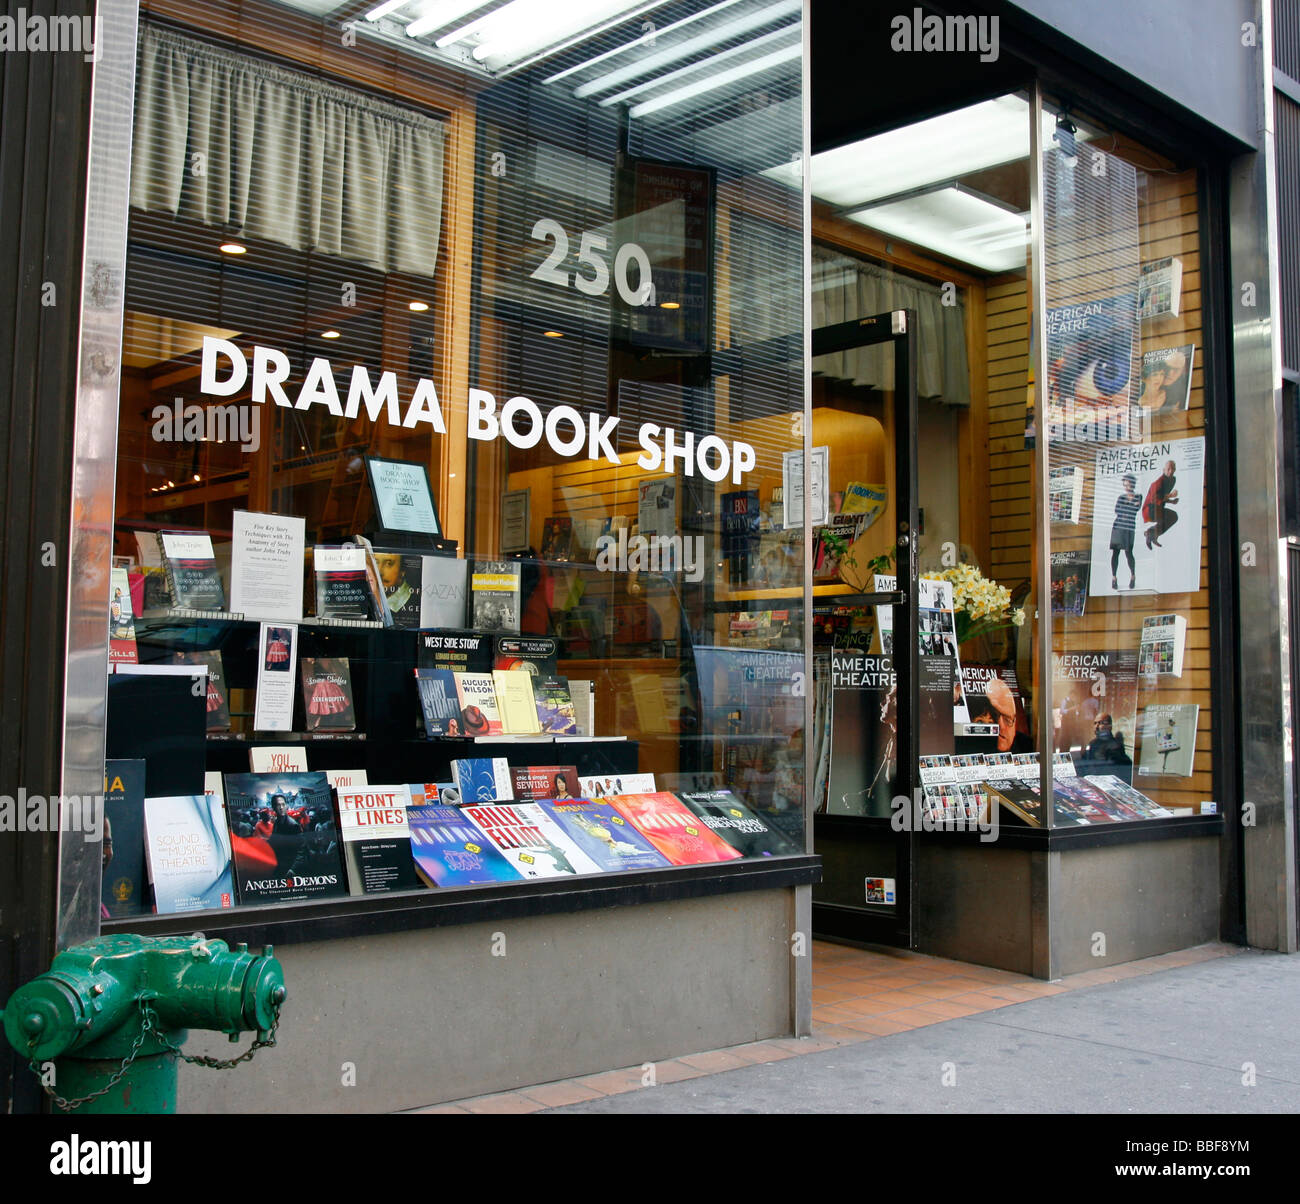 Drama Book Shop. Stock Photo